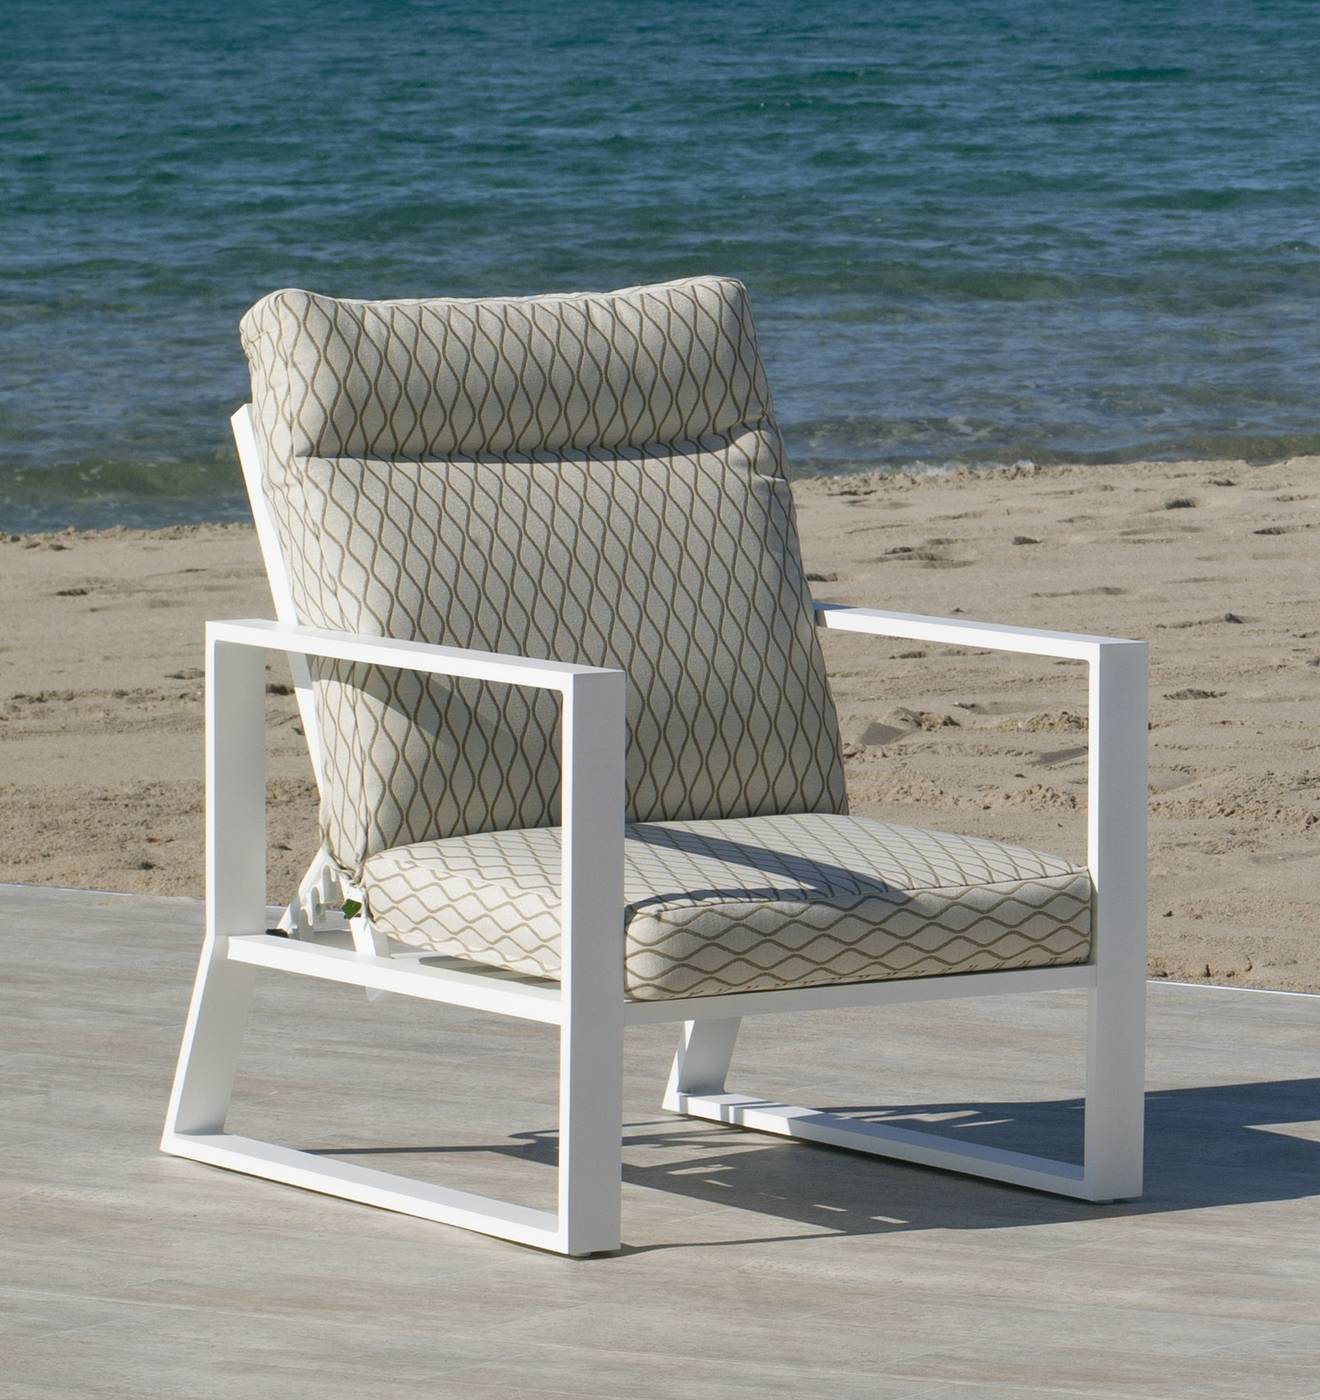 Set Aluminio Bolonia-740 - Conjunto aluminio: sofá 3 plazas + 2 sillones + mesa de centro + 2 taburetes. Respaldos reclinables. Colores: blanco, antracita, champagne, plata o marrón.